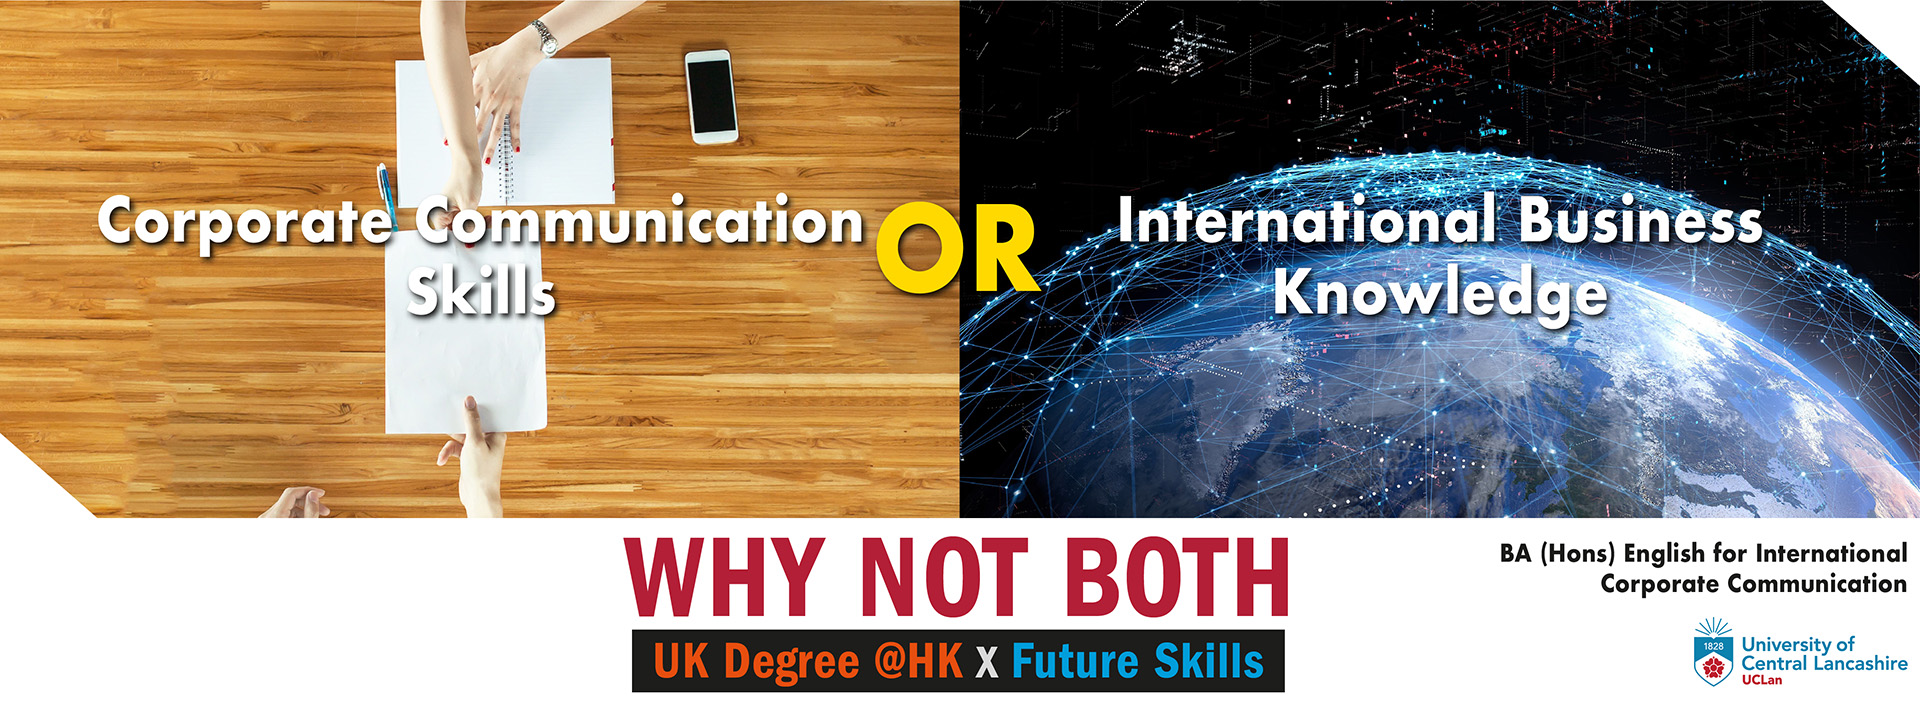 BA (Hons) English for International Corporate Communication